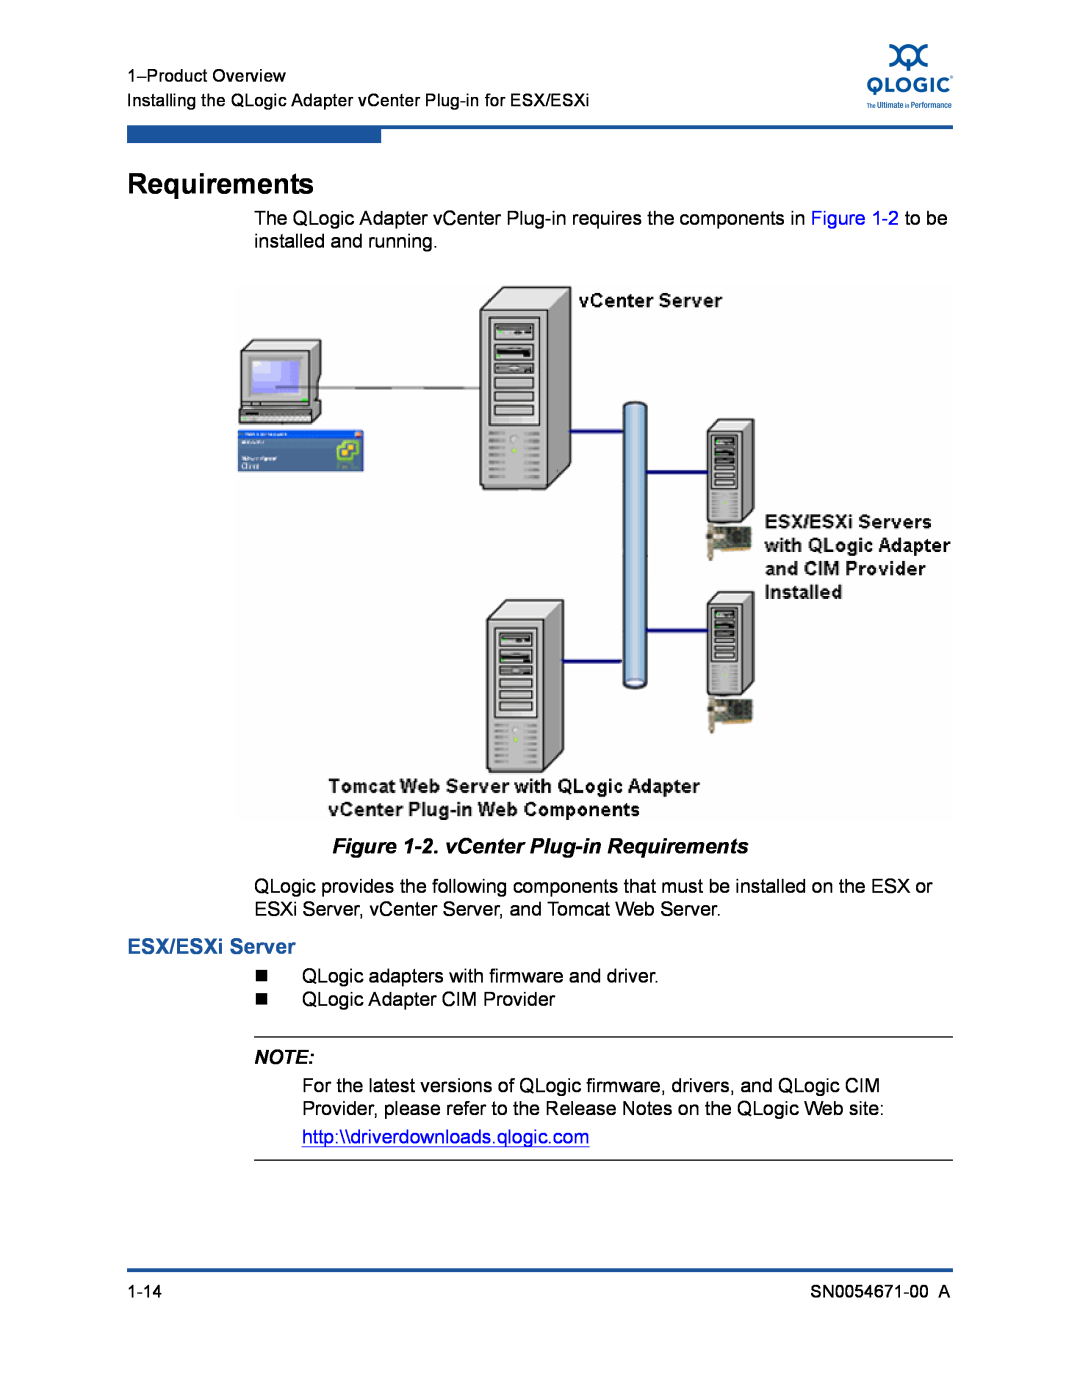 Q-Logic 8200, 3200 manual 2. vCenter Plug-in Requirements, ESX/ESXi Server, http\\driverdownloads.qlogic.com 